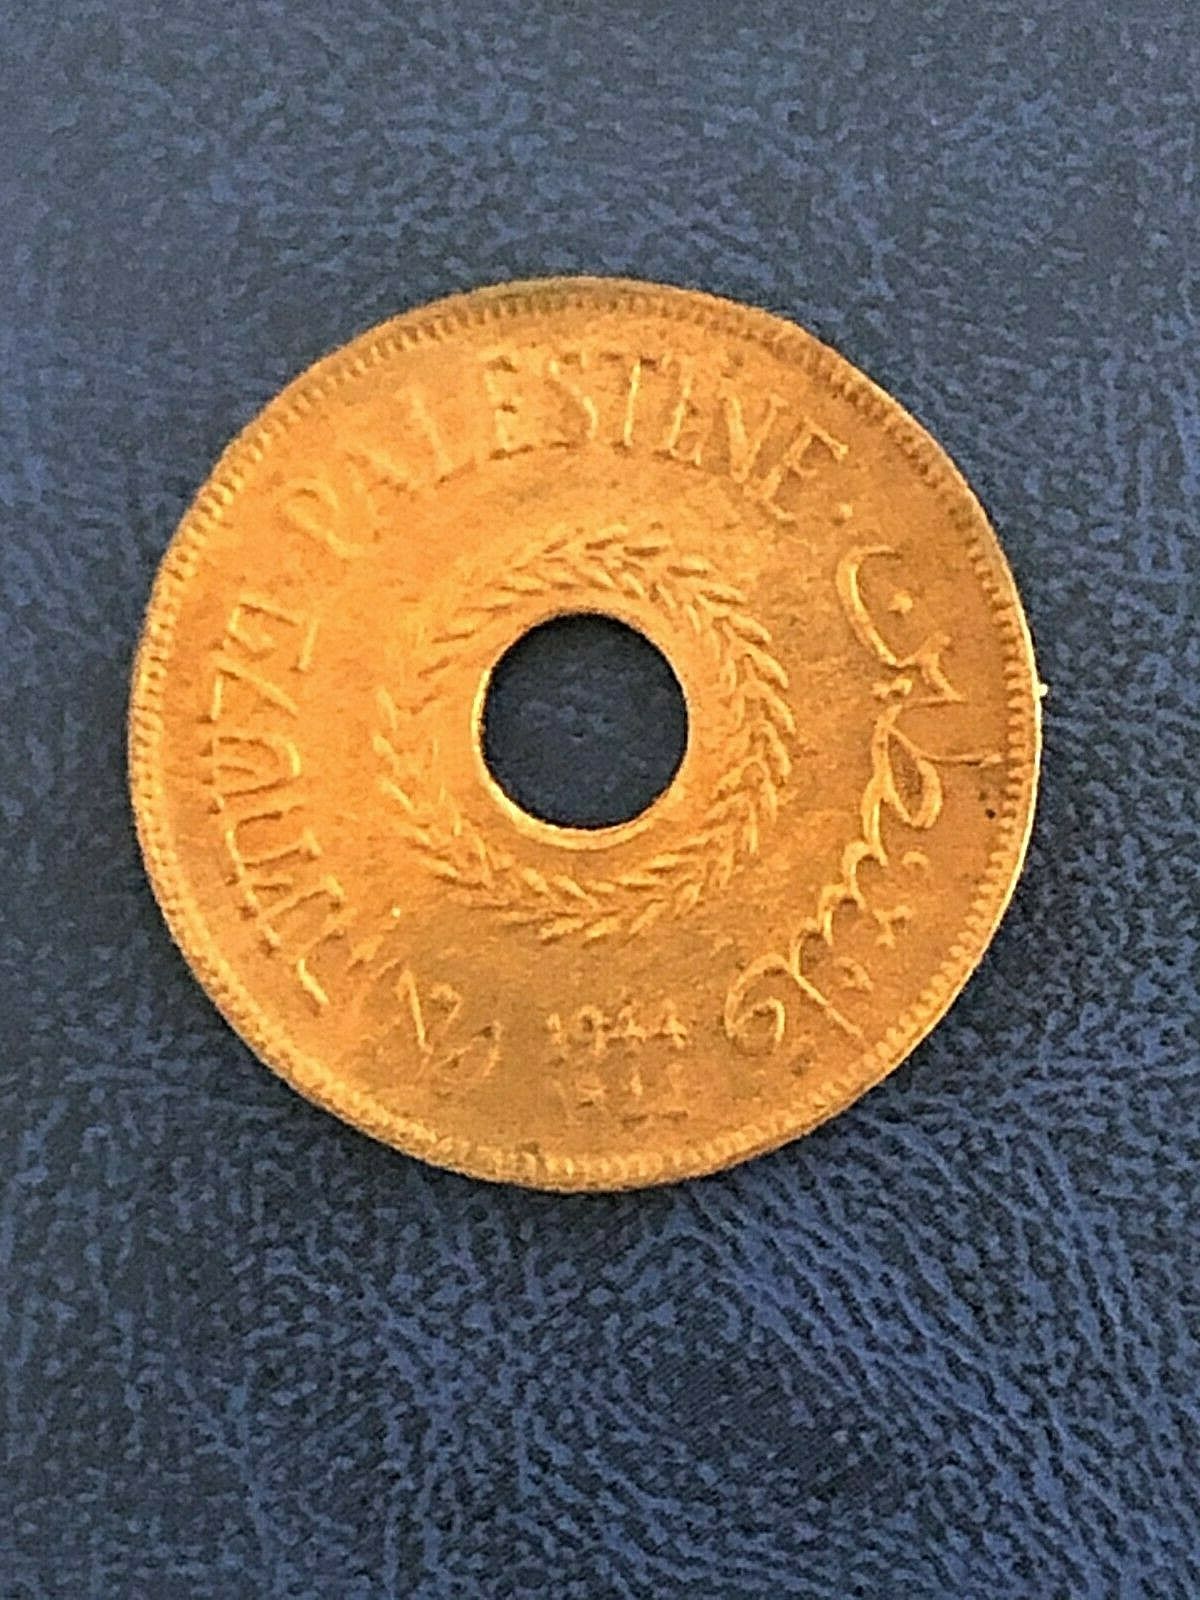 Palestine 20 Mils 1944, Bronze Coin, Rare, British Mandate